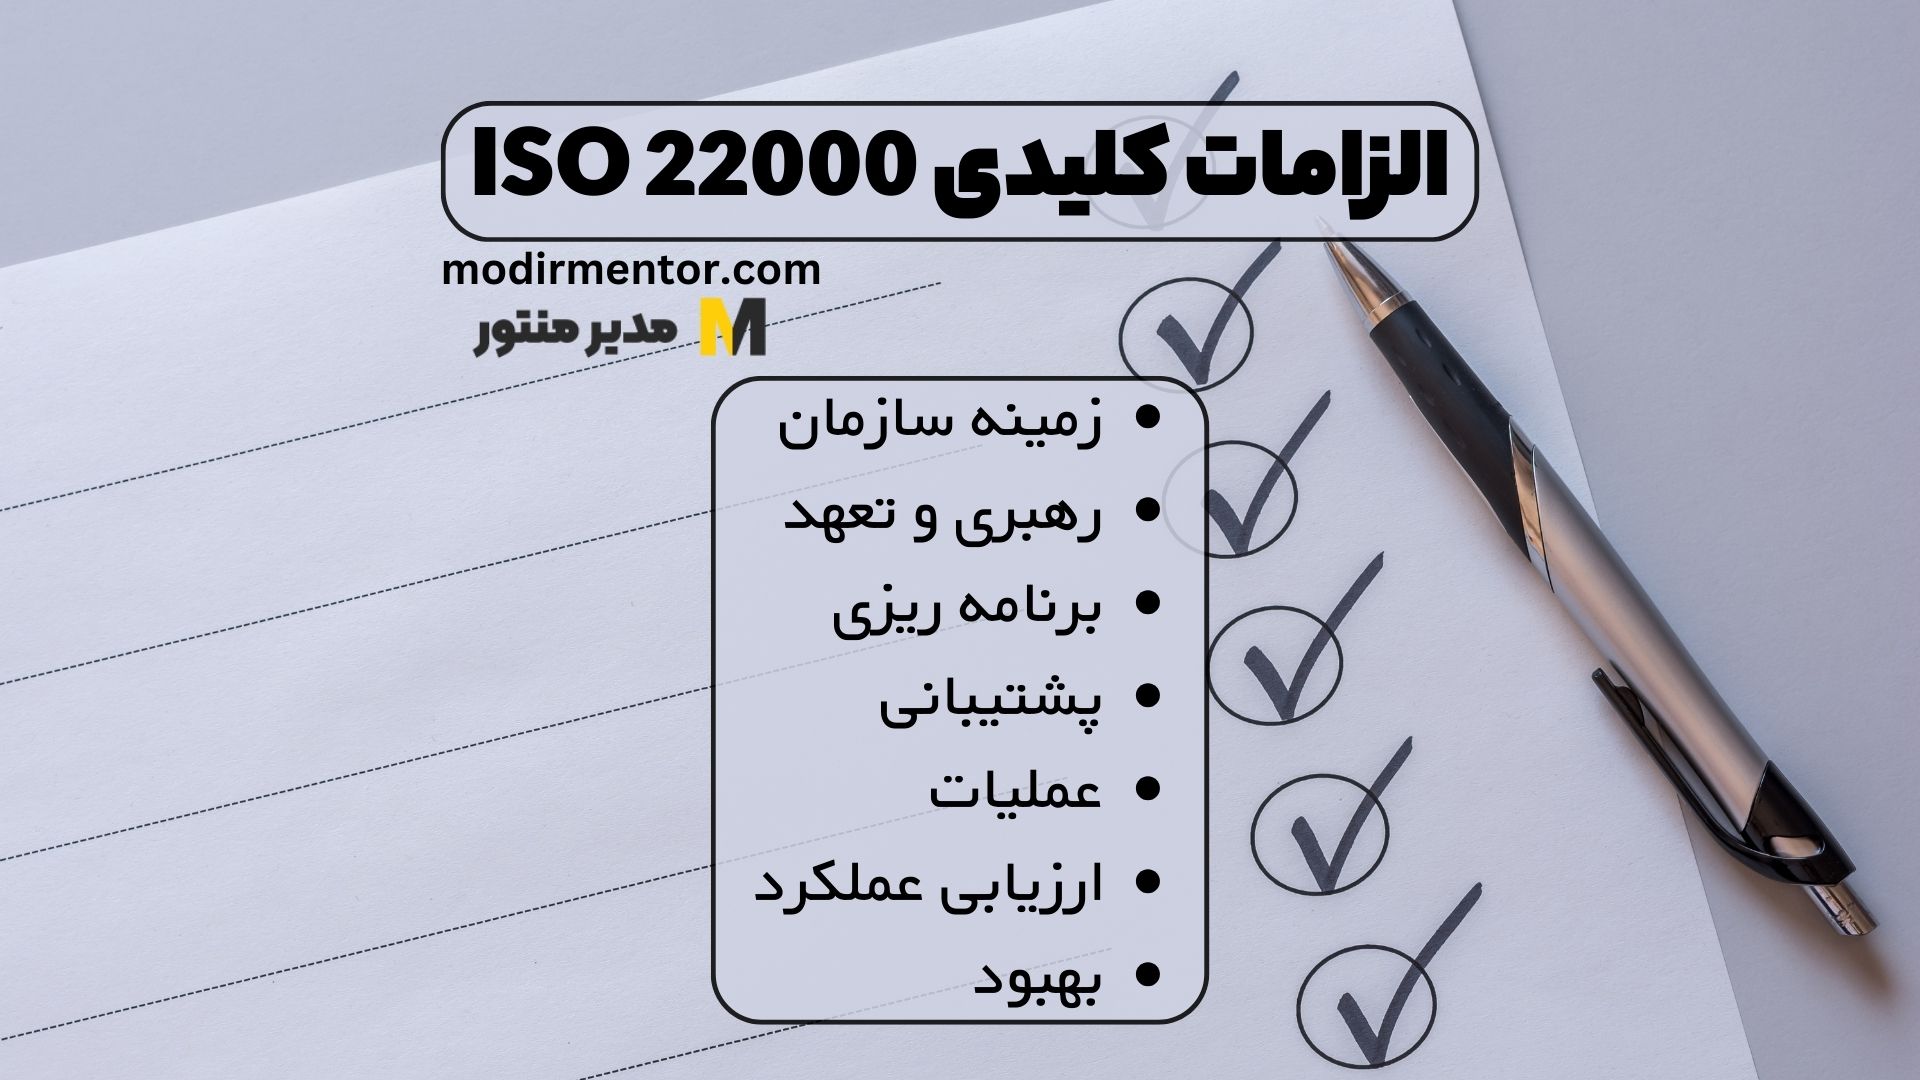 الزامات کلیدی ISO 22000: